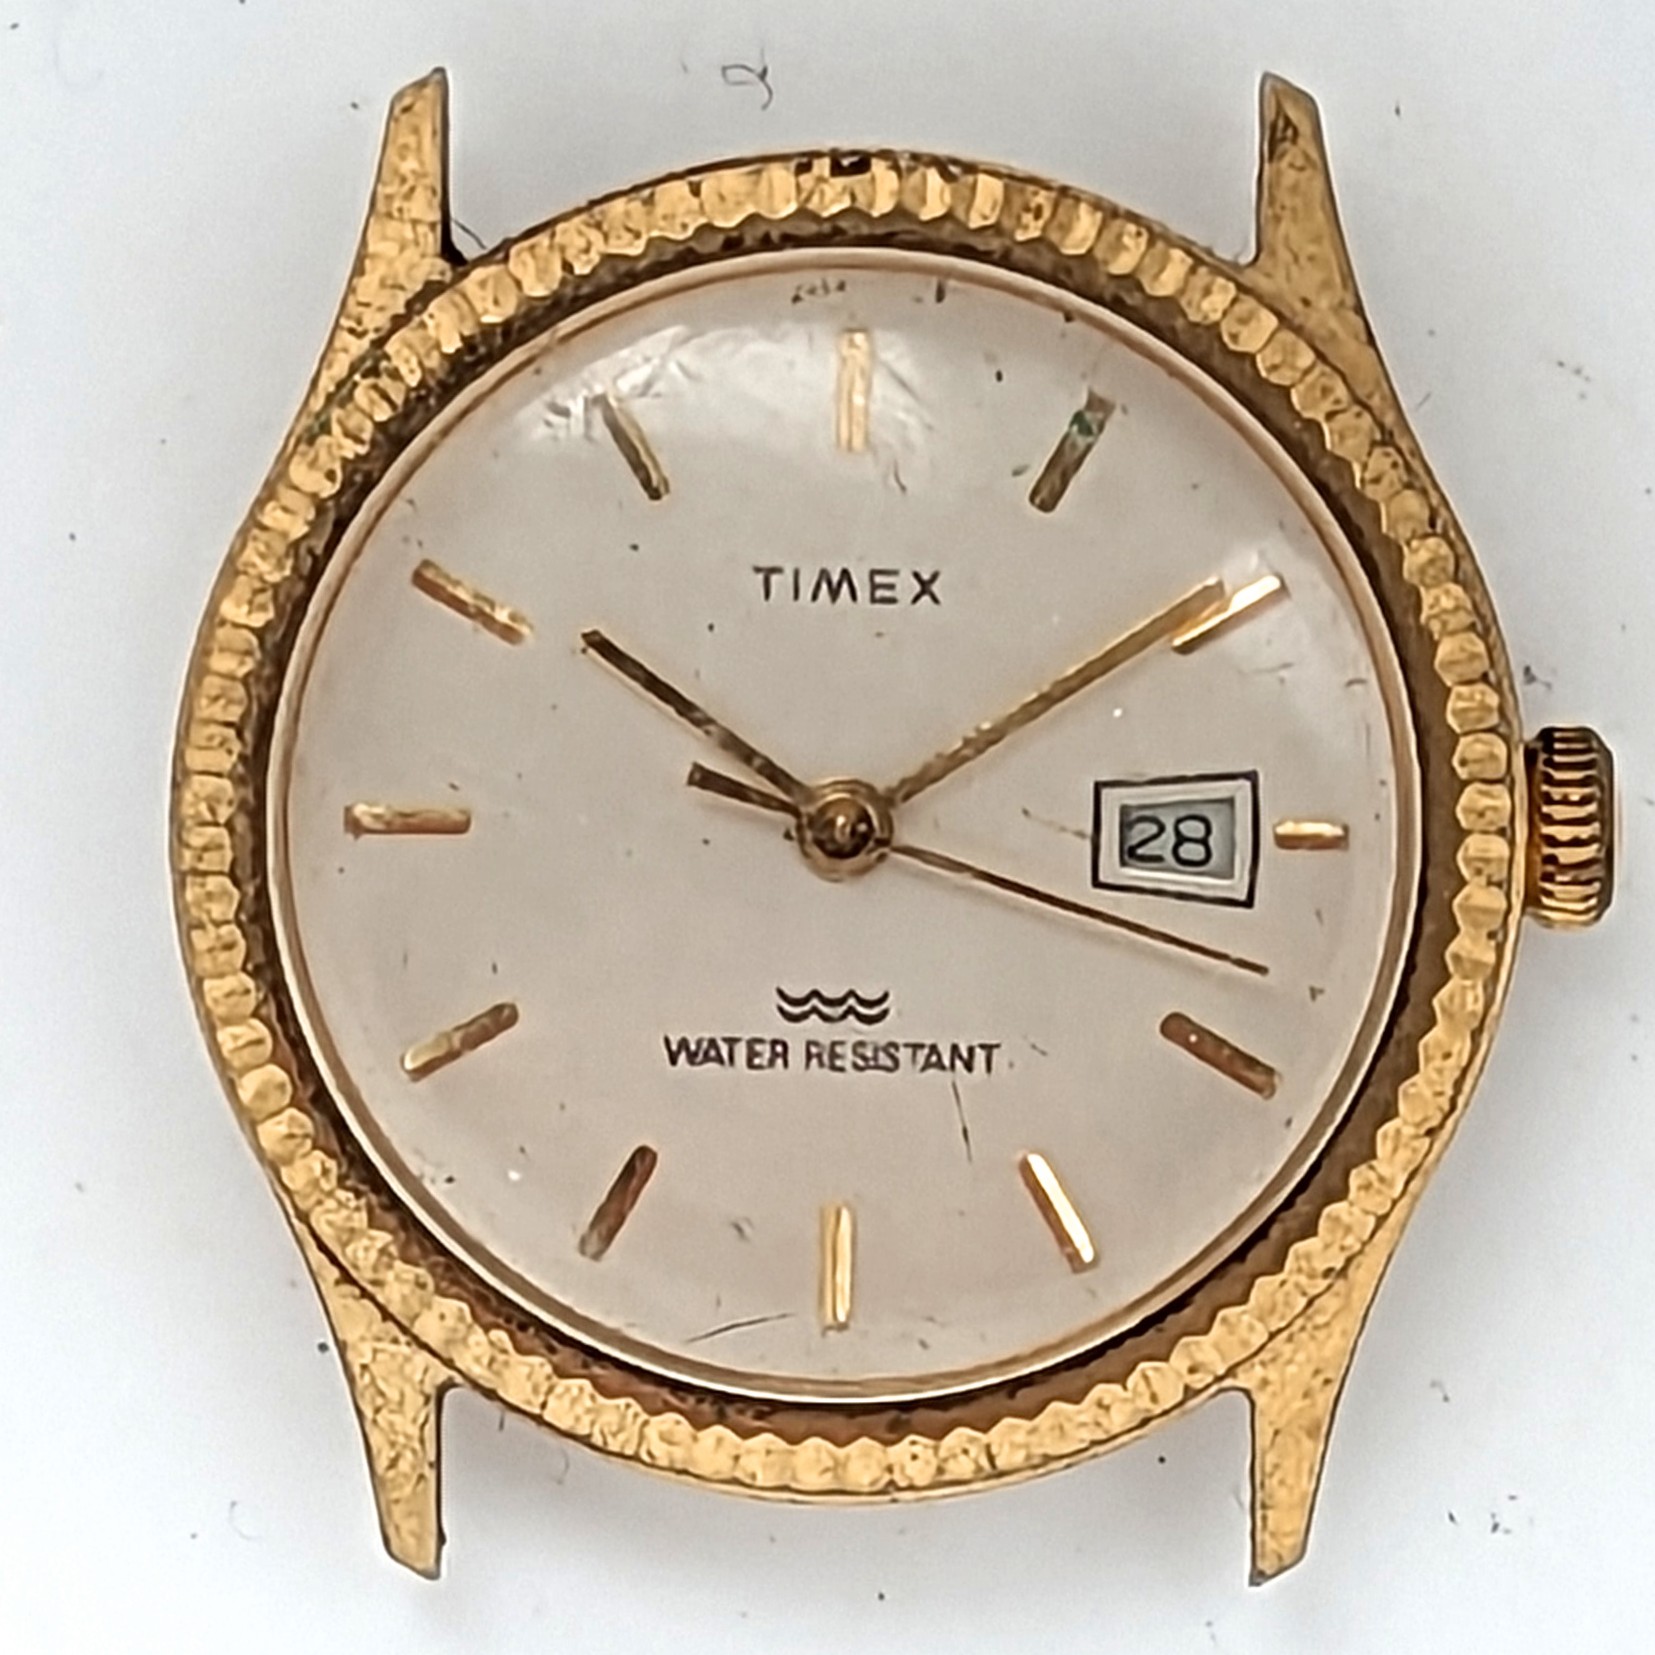 Timex Sprite 21012 10181 [1981]